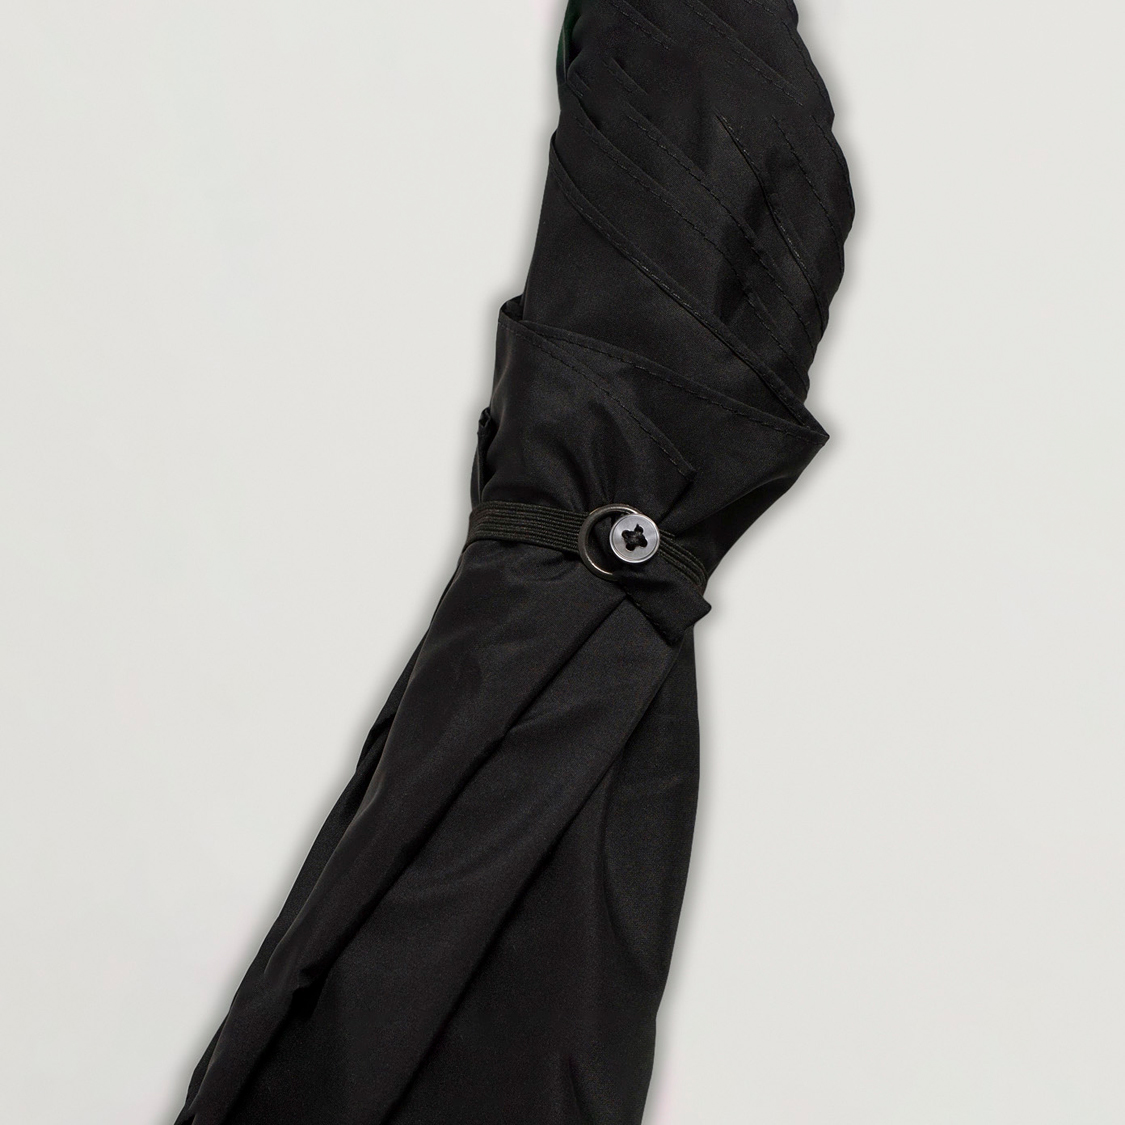 Mies | Sateenvarjot | Fox Umbrellas | Polished Cherrywood Solid Umbrella Black